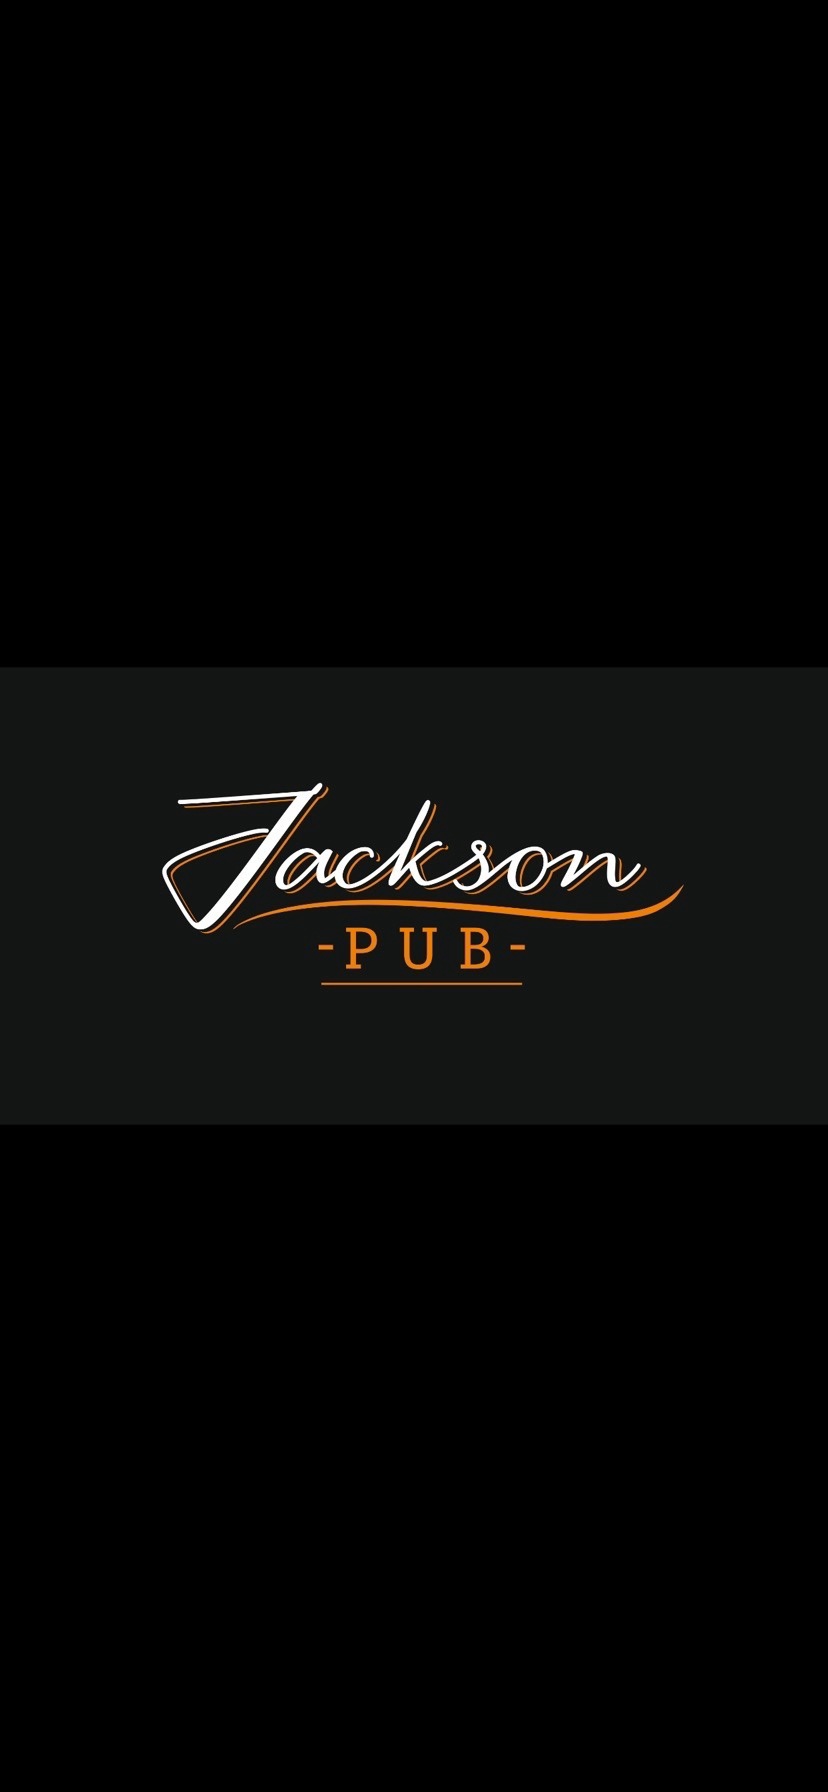 Jackson pub logo